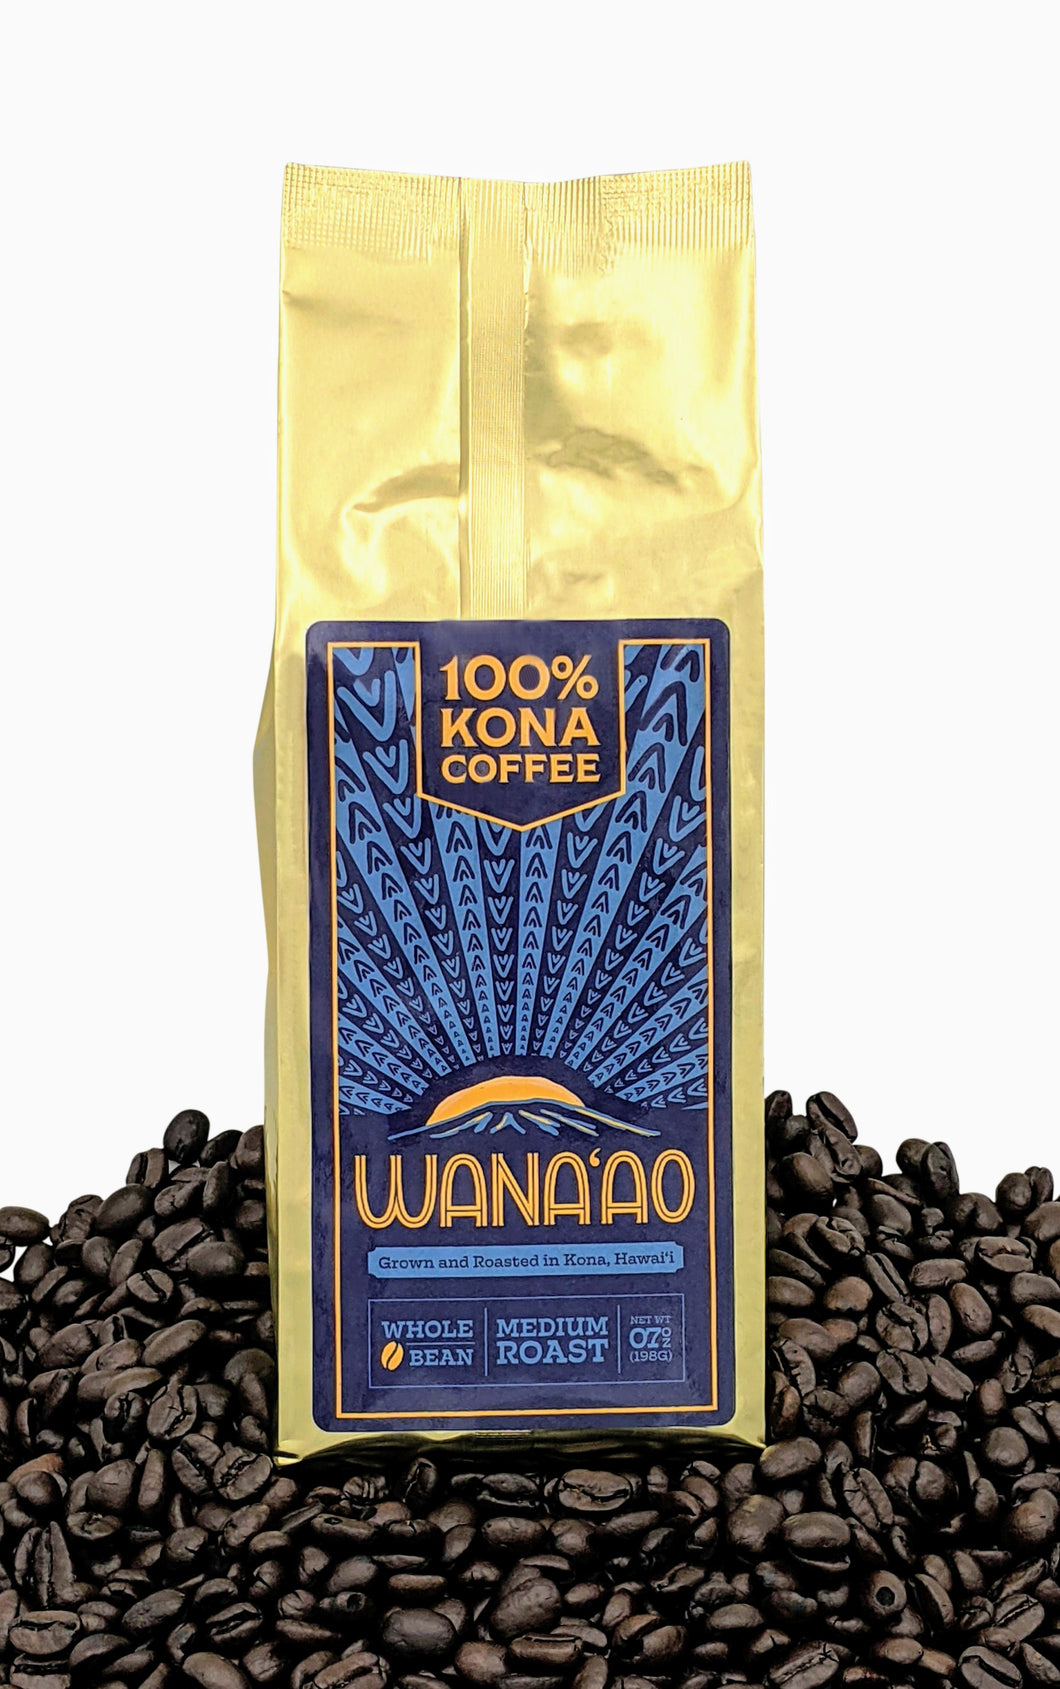 7oz Bag of pure 100% Kona Coffee